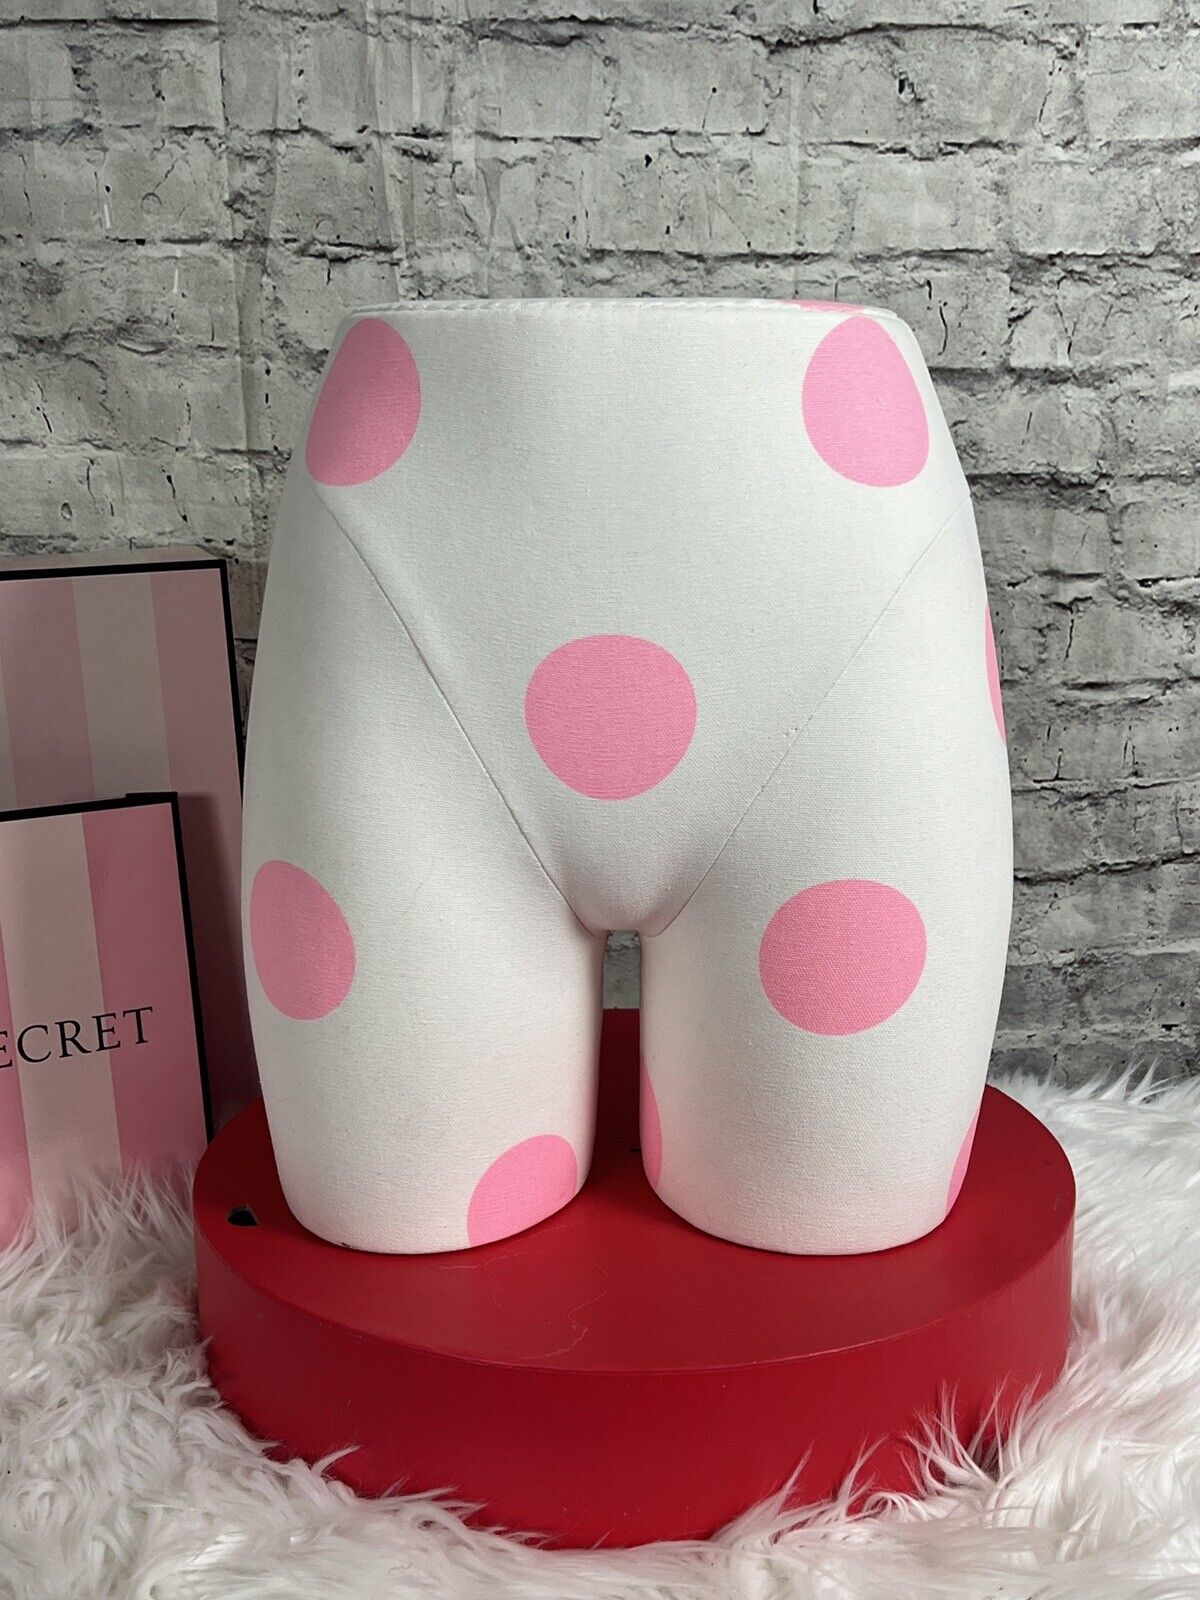 Victorias Secret PINK Store Display FORM Polka Dot Torso Mannequin SUPER RARE